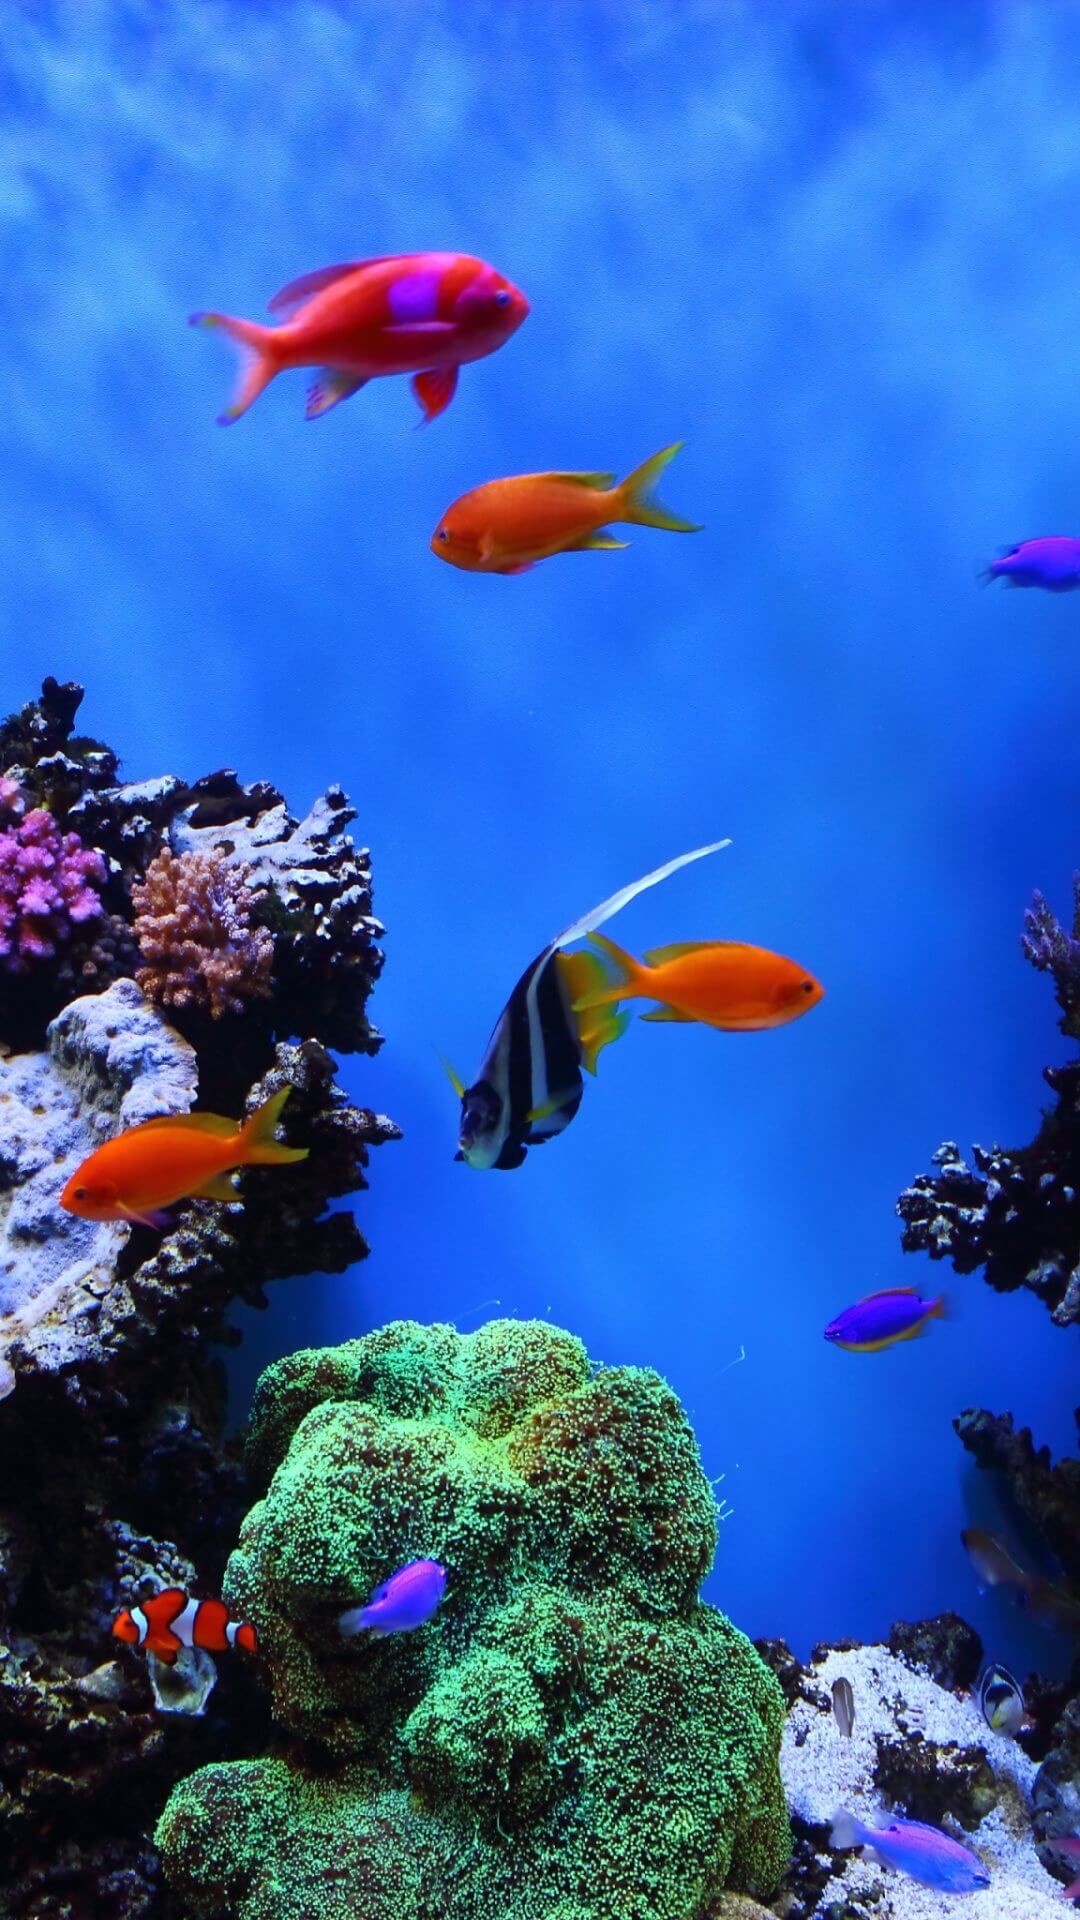 1080x1920 Animal wallpaper aquarium 5, iPhone Wallpaper, iphone 4 background